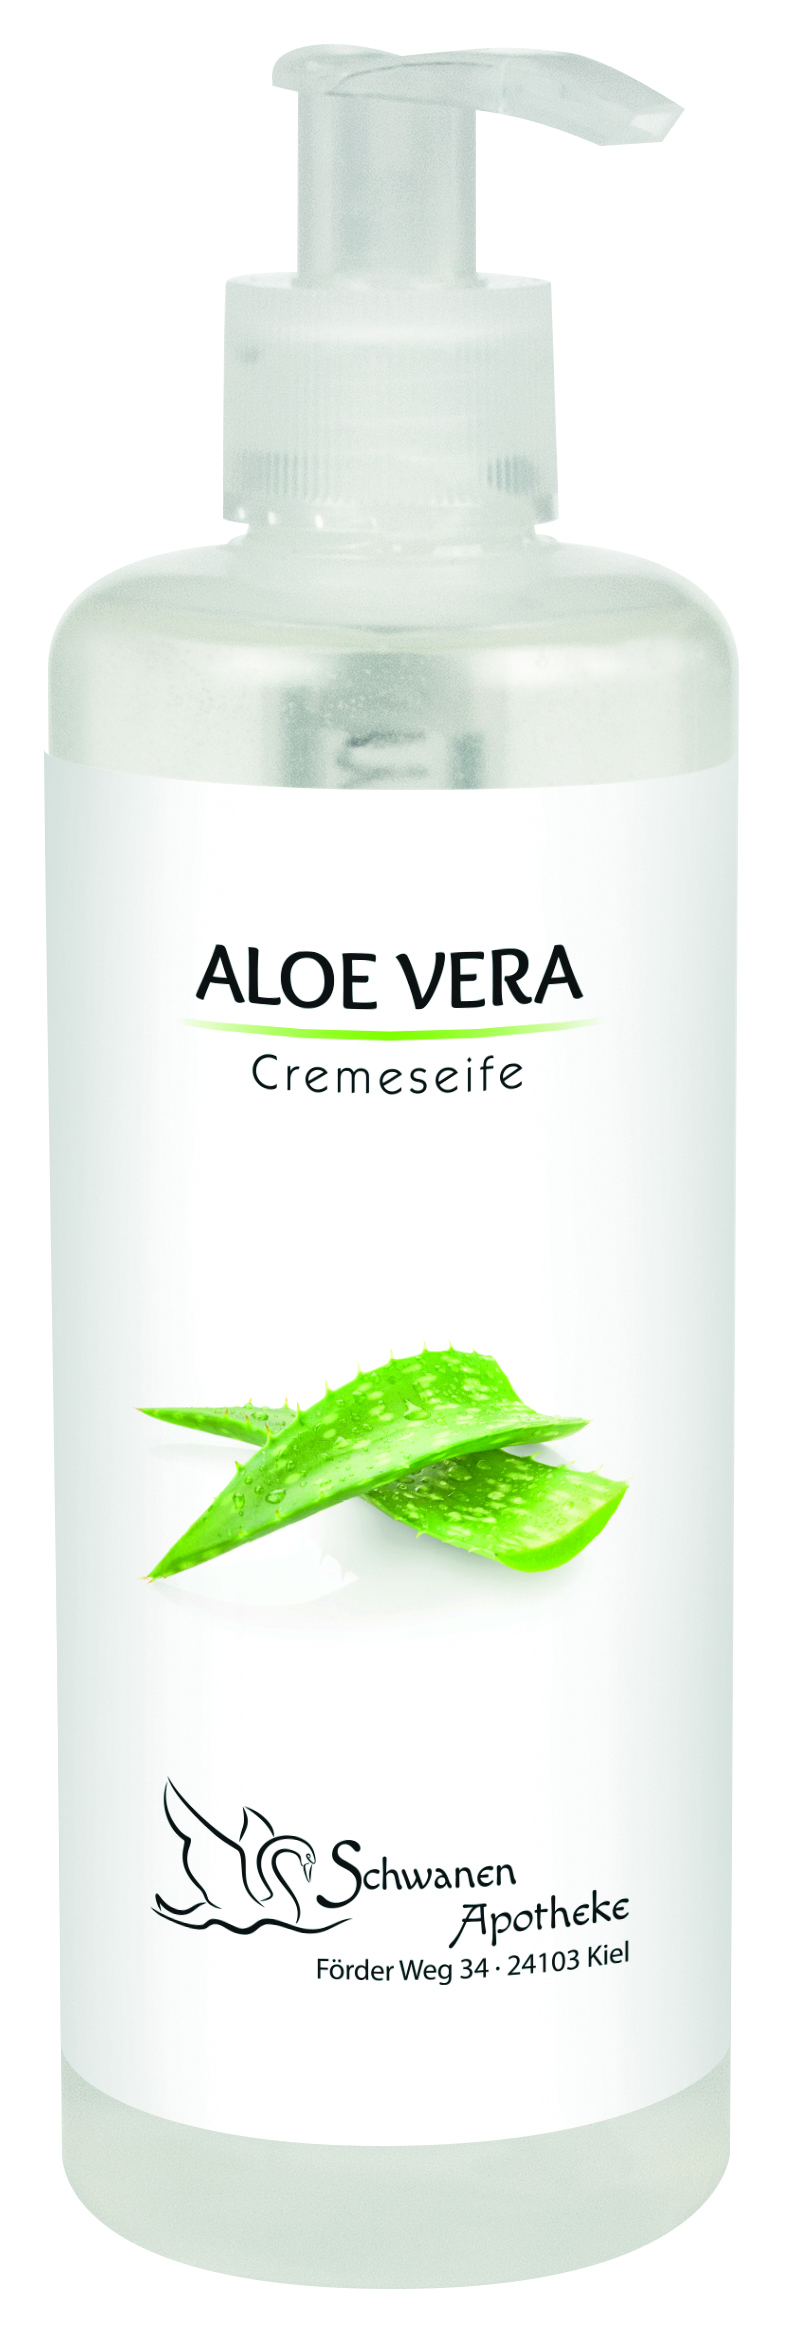 300 ml Pumpspender Cremeseife "Aloe Vera"